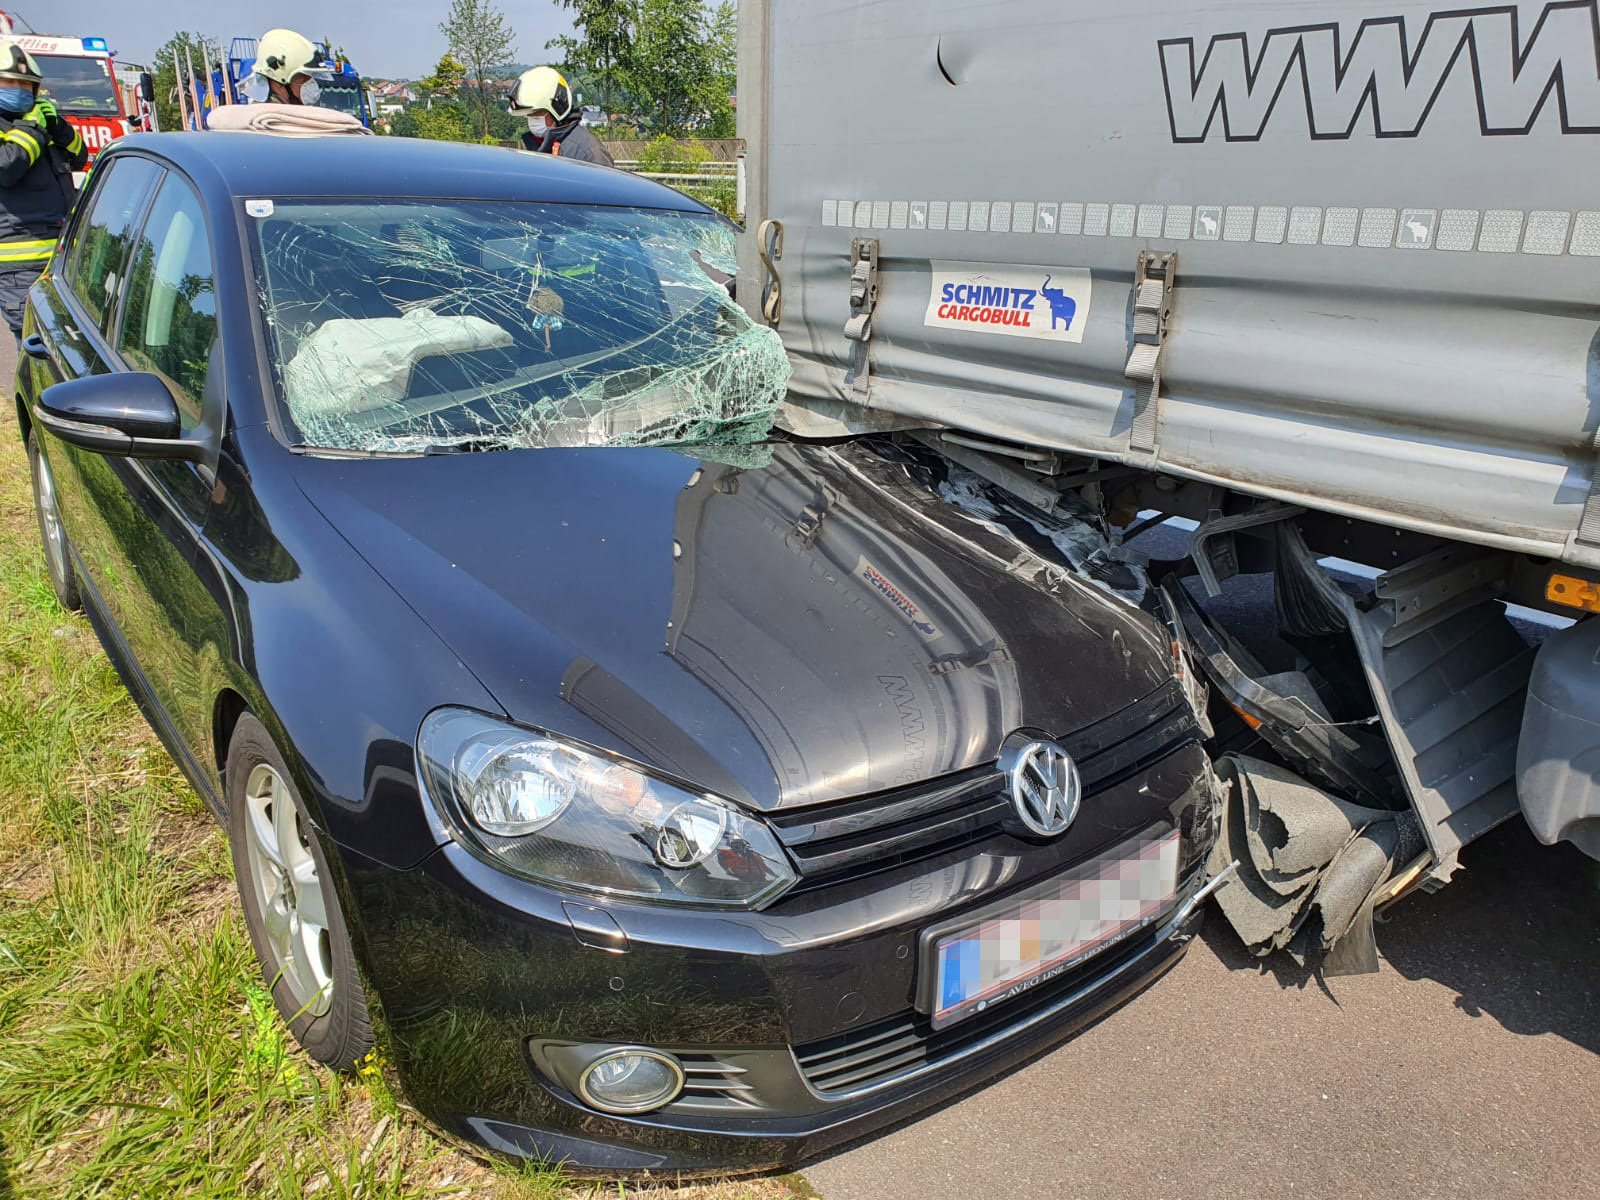 20.07.2020 - EINSATZ: Schwerer Verkehrsunfall auf der A7